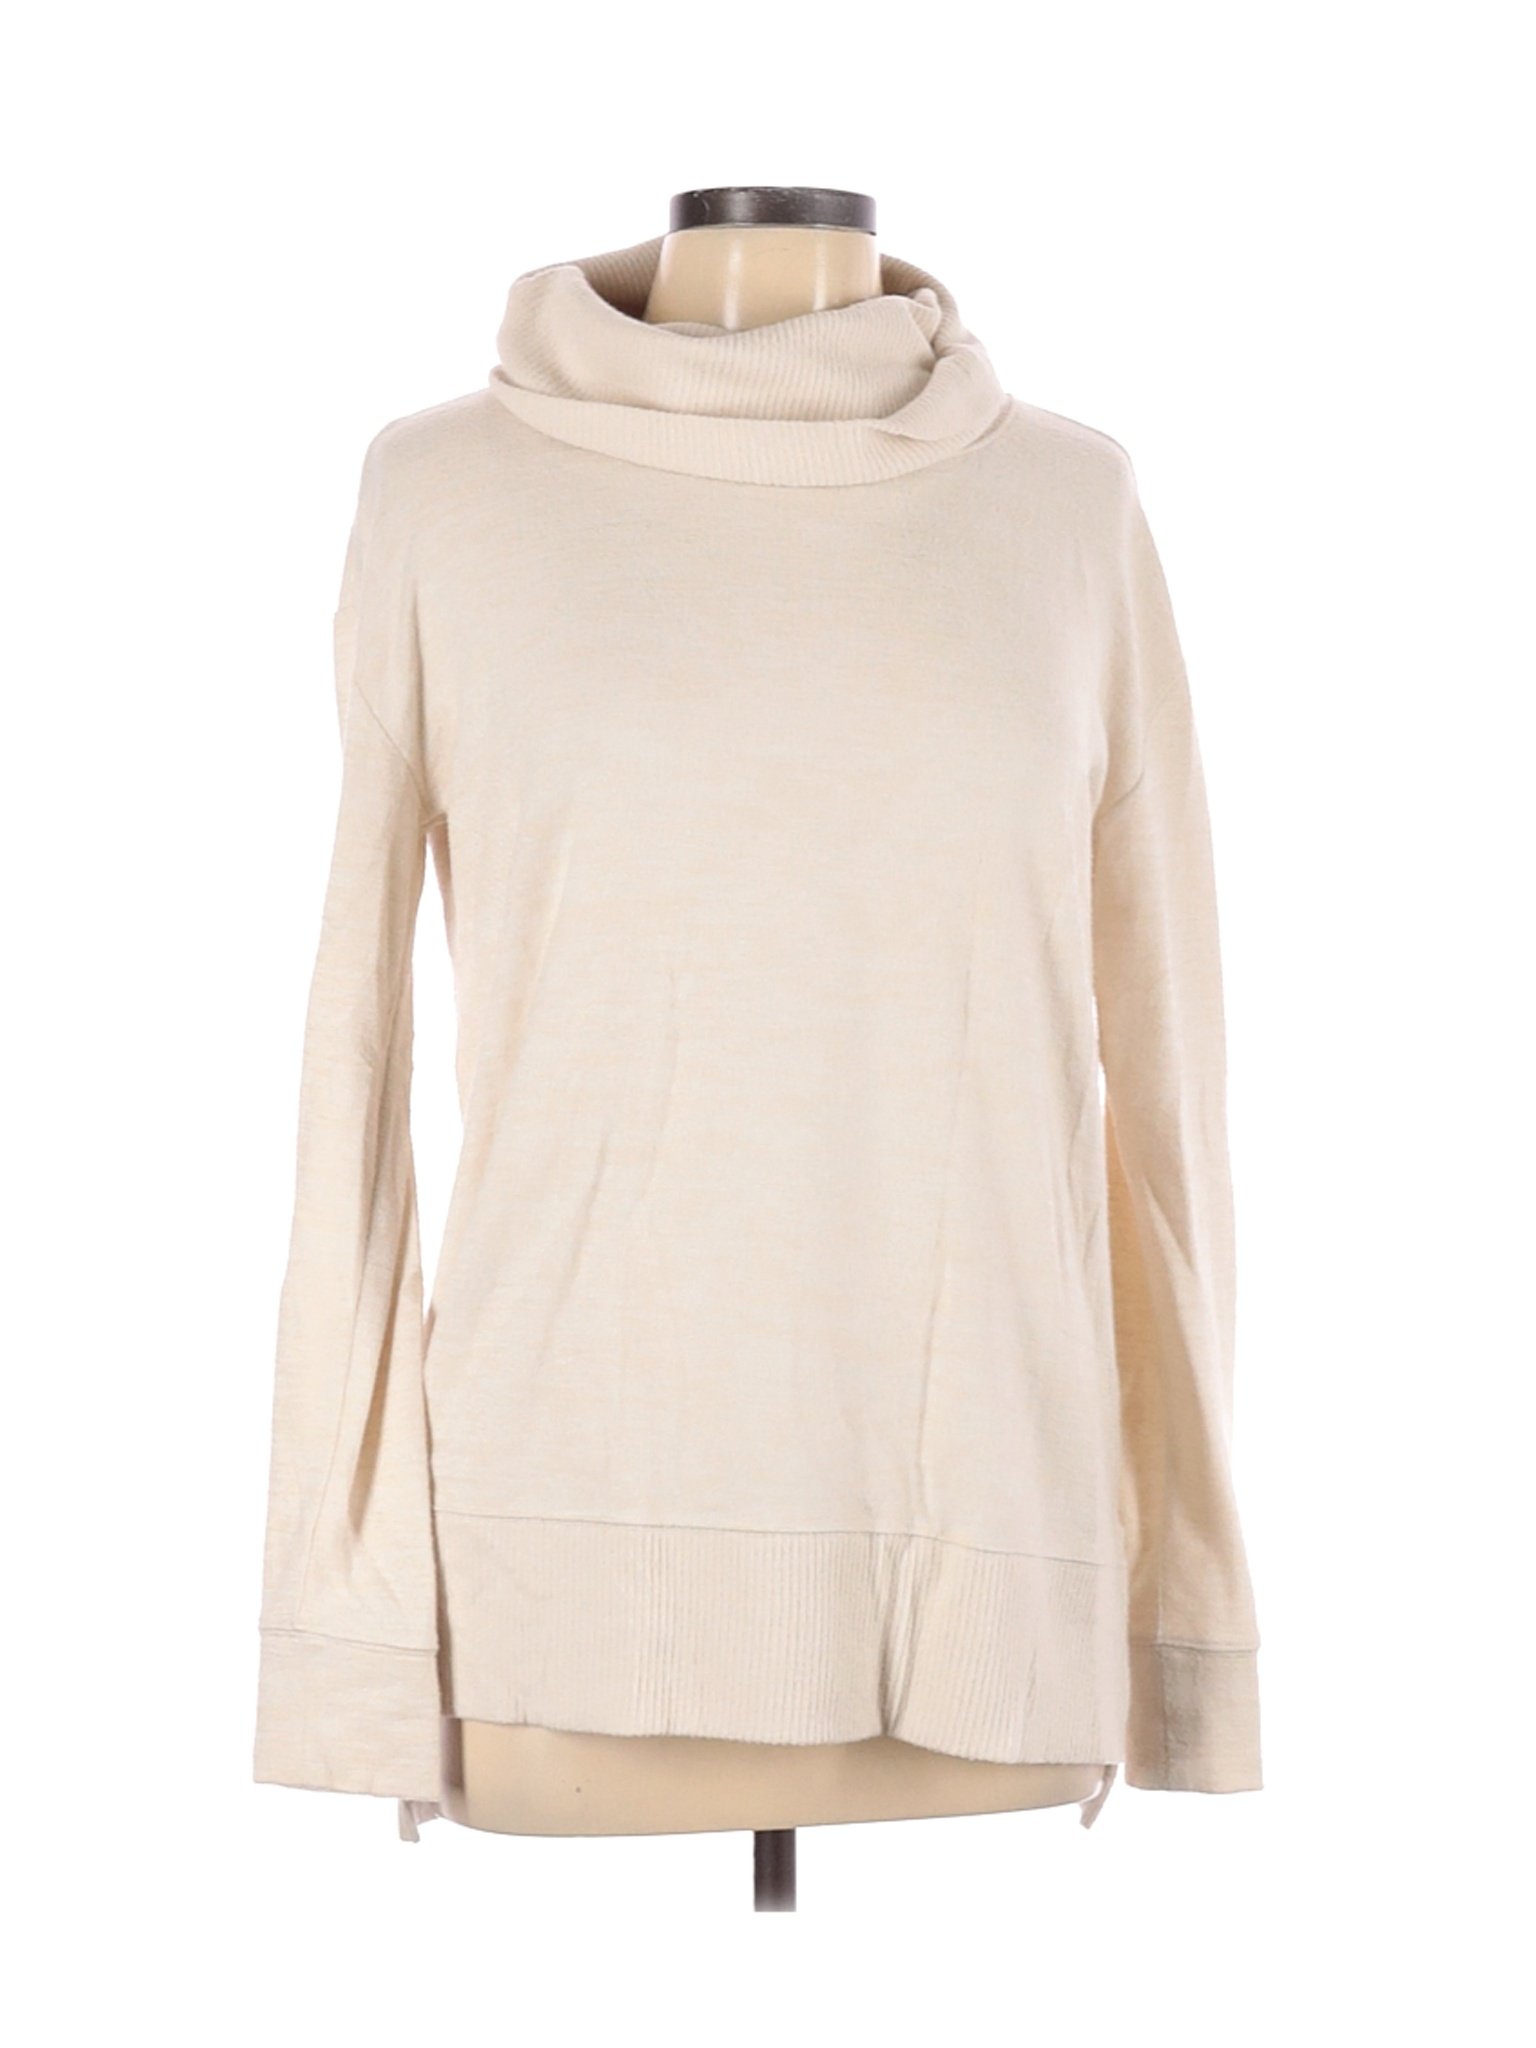 Gap Women Ivory Turtleneck Sweater M | eBay